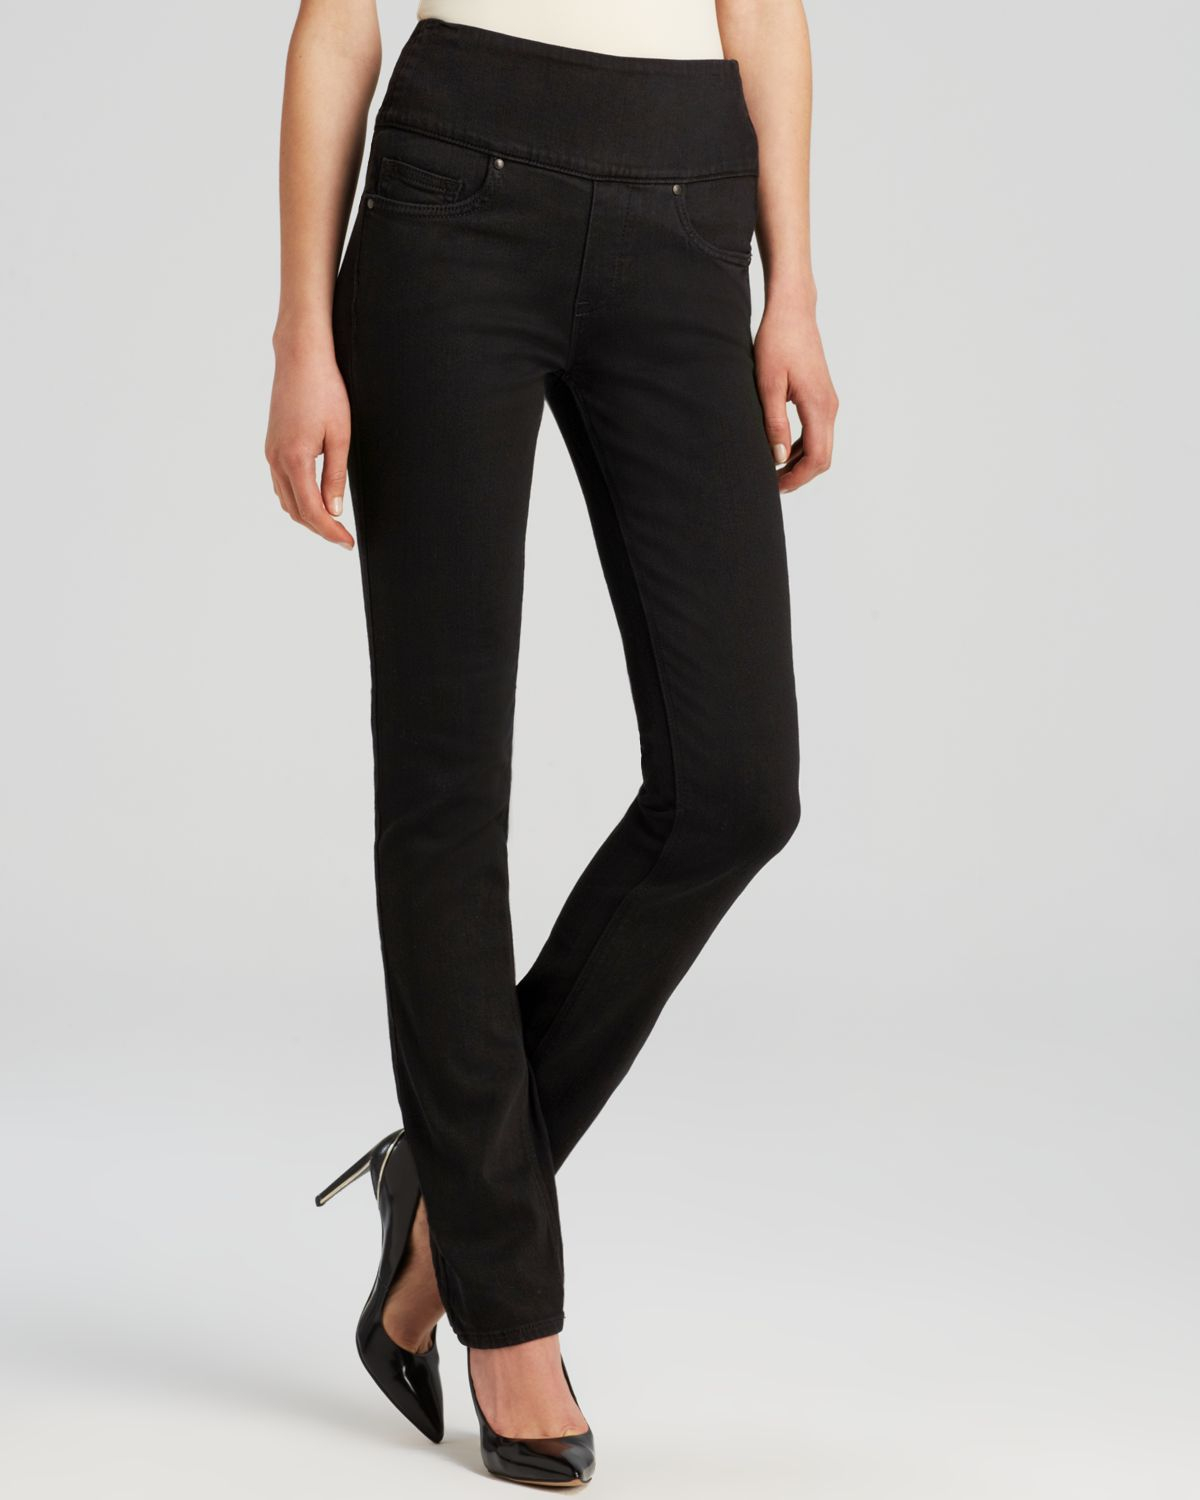 Lyst - Spanx Spanx® Denim Signature Straight Jeans In Black in Black